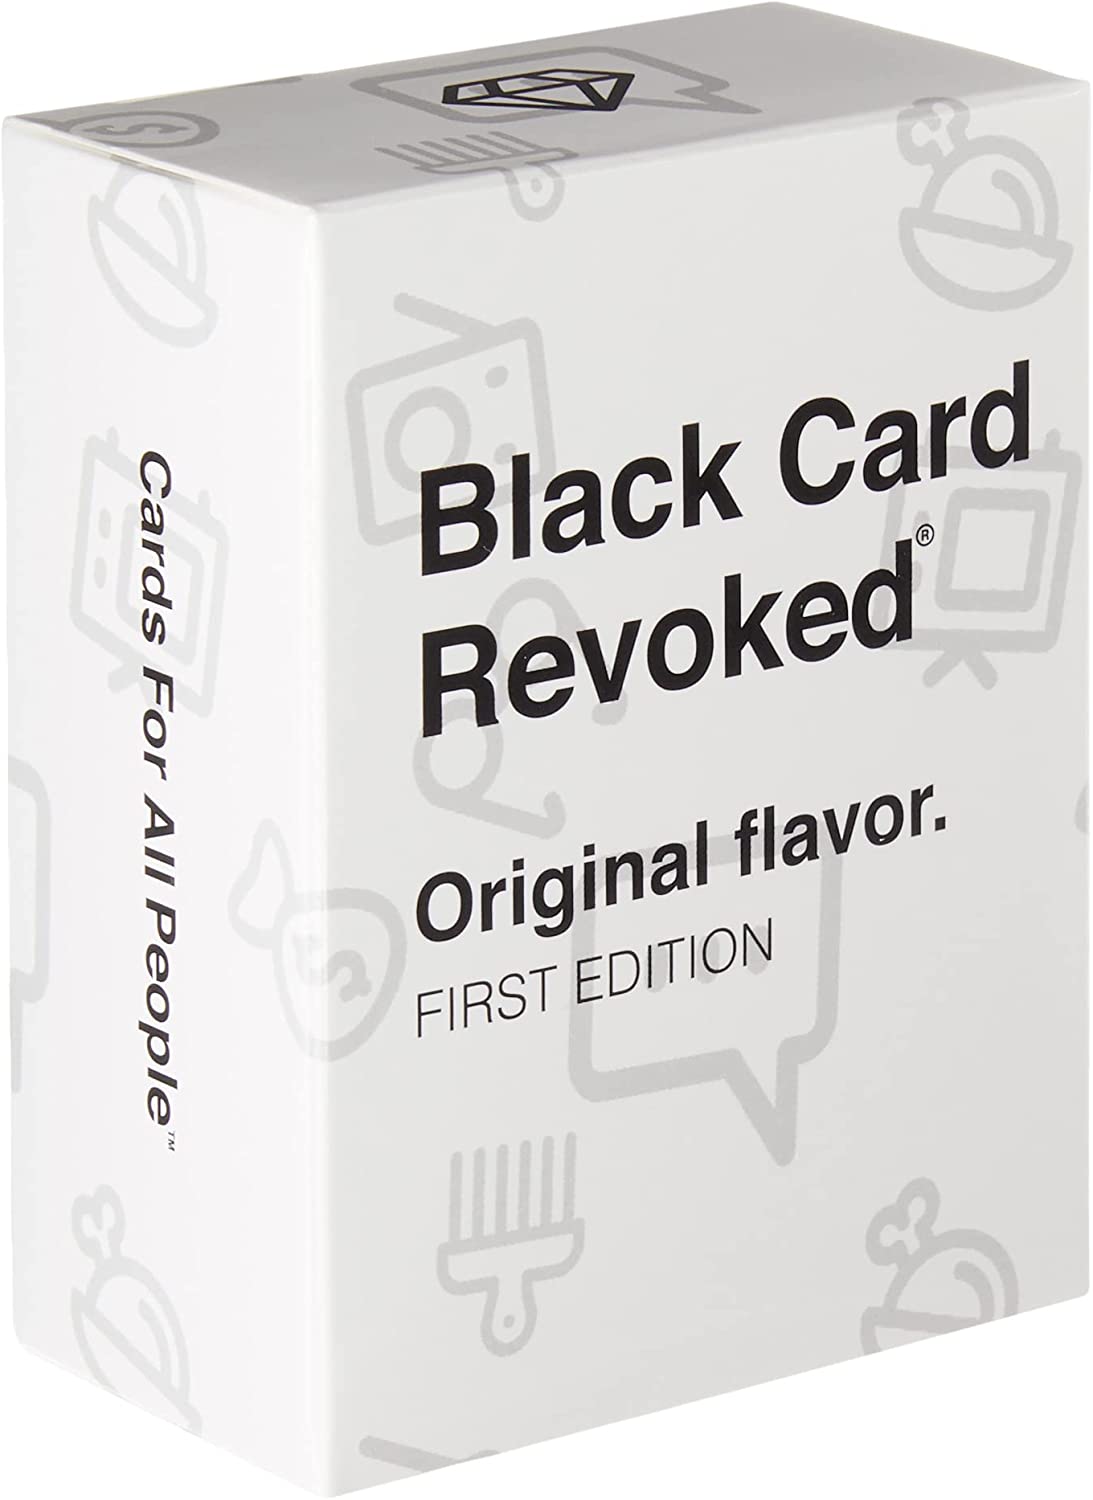 Black Card Revoked Original Flavor - First Edition